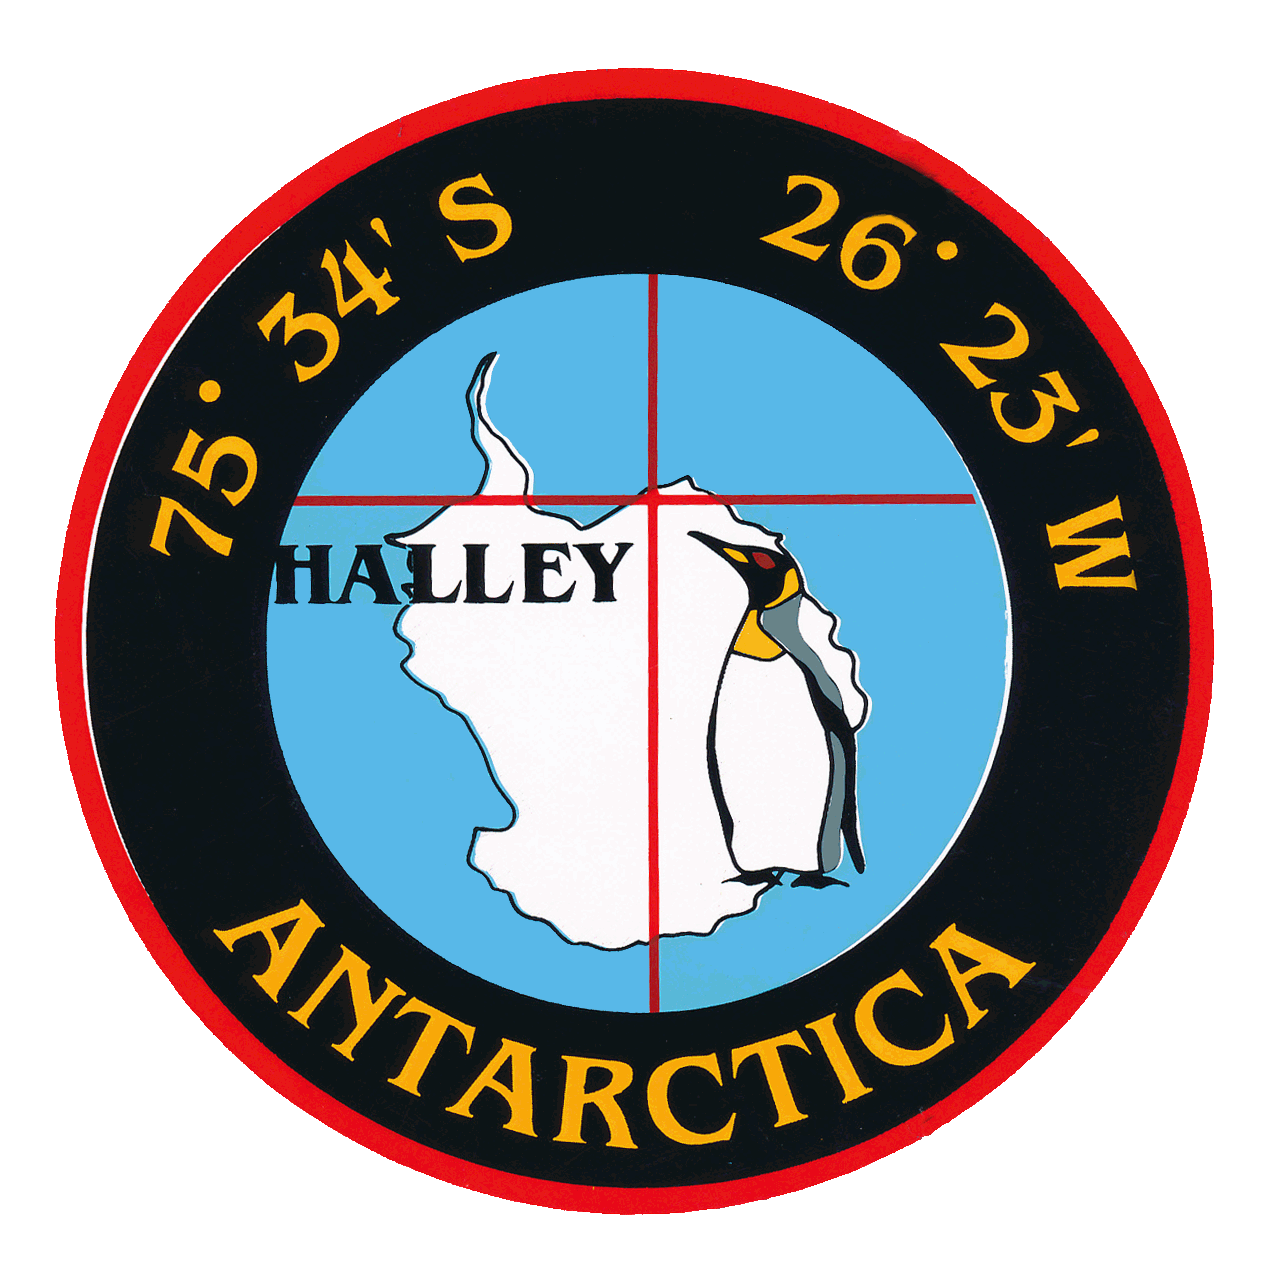 Halley logo